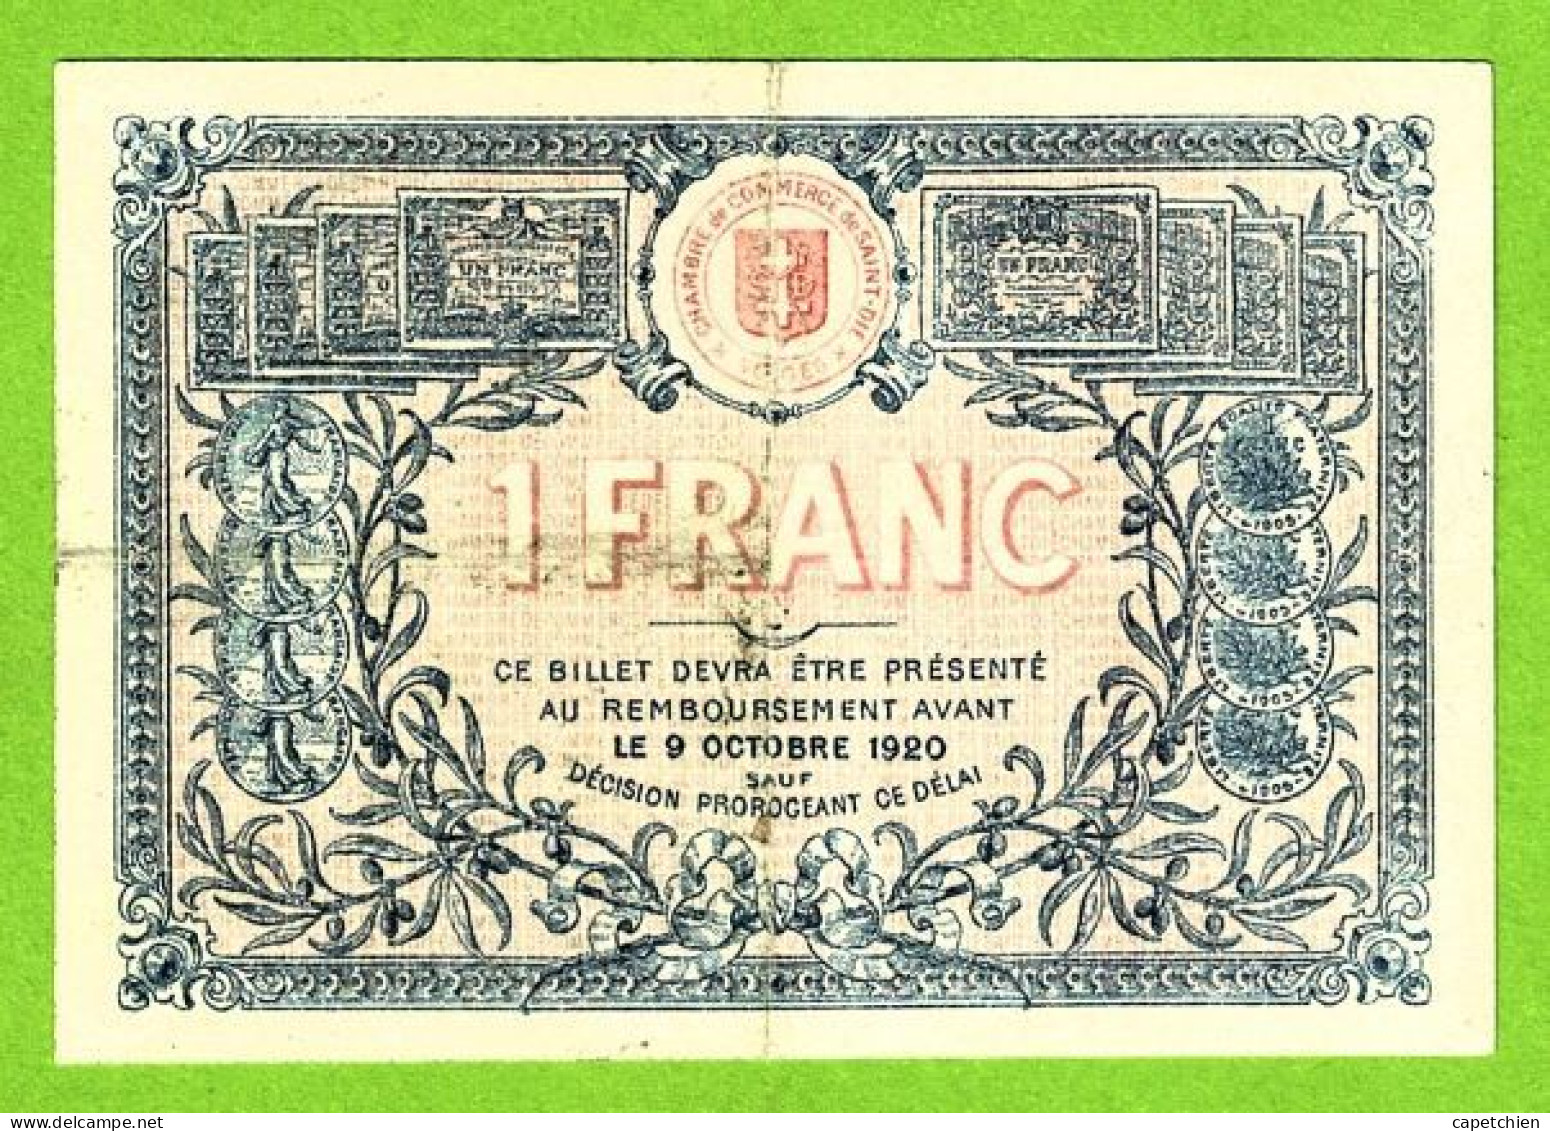 FRANCE / CHAMBRE DE COMMERCE De SAINT DIE / 1 FRANC / 9 OCTOBRE 1915 / 013,684 - Handelskammer